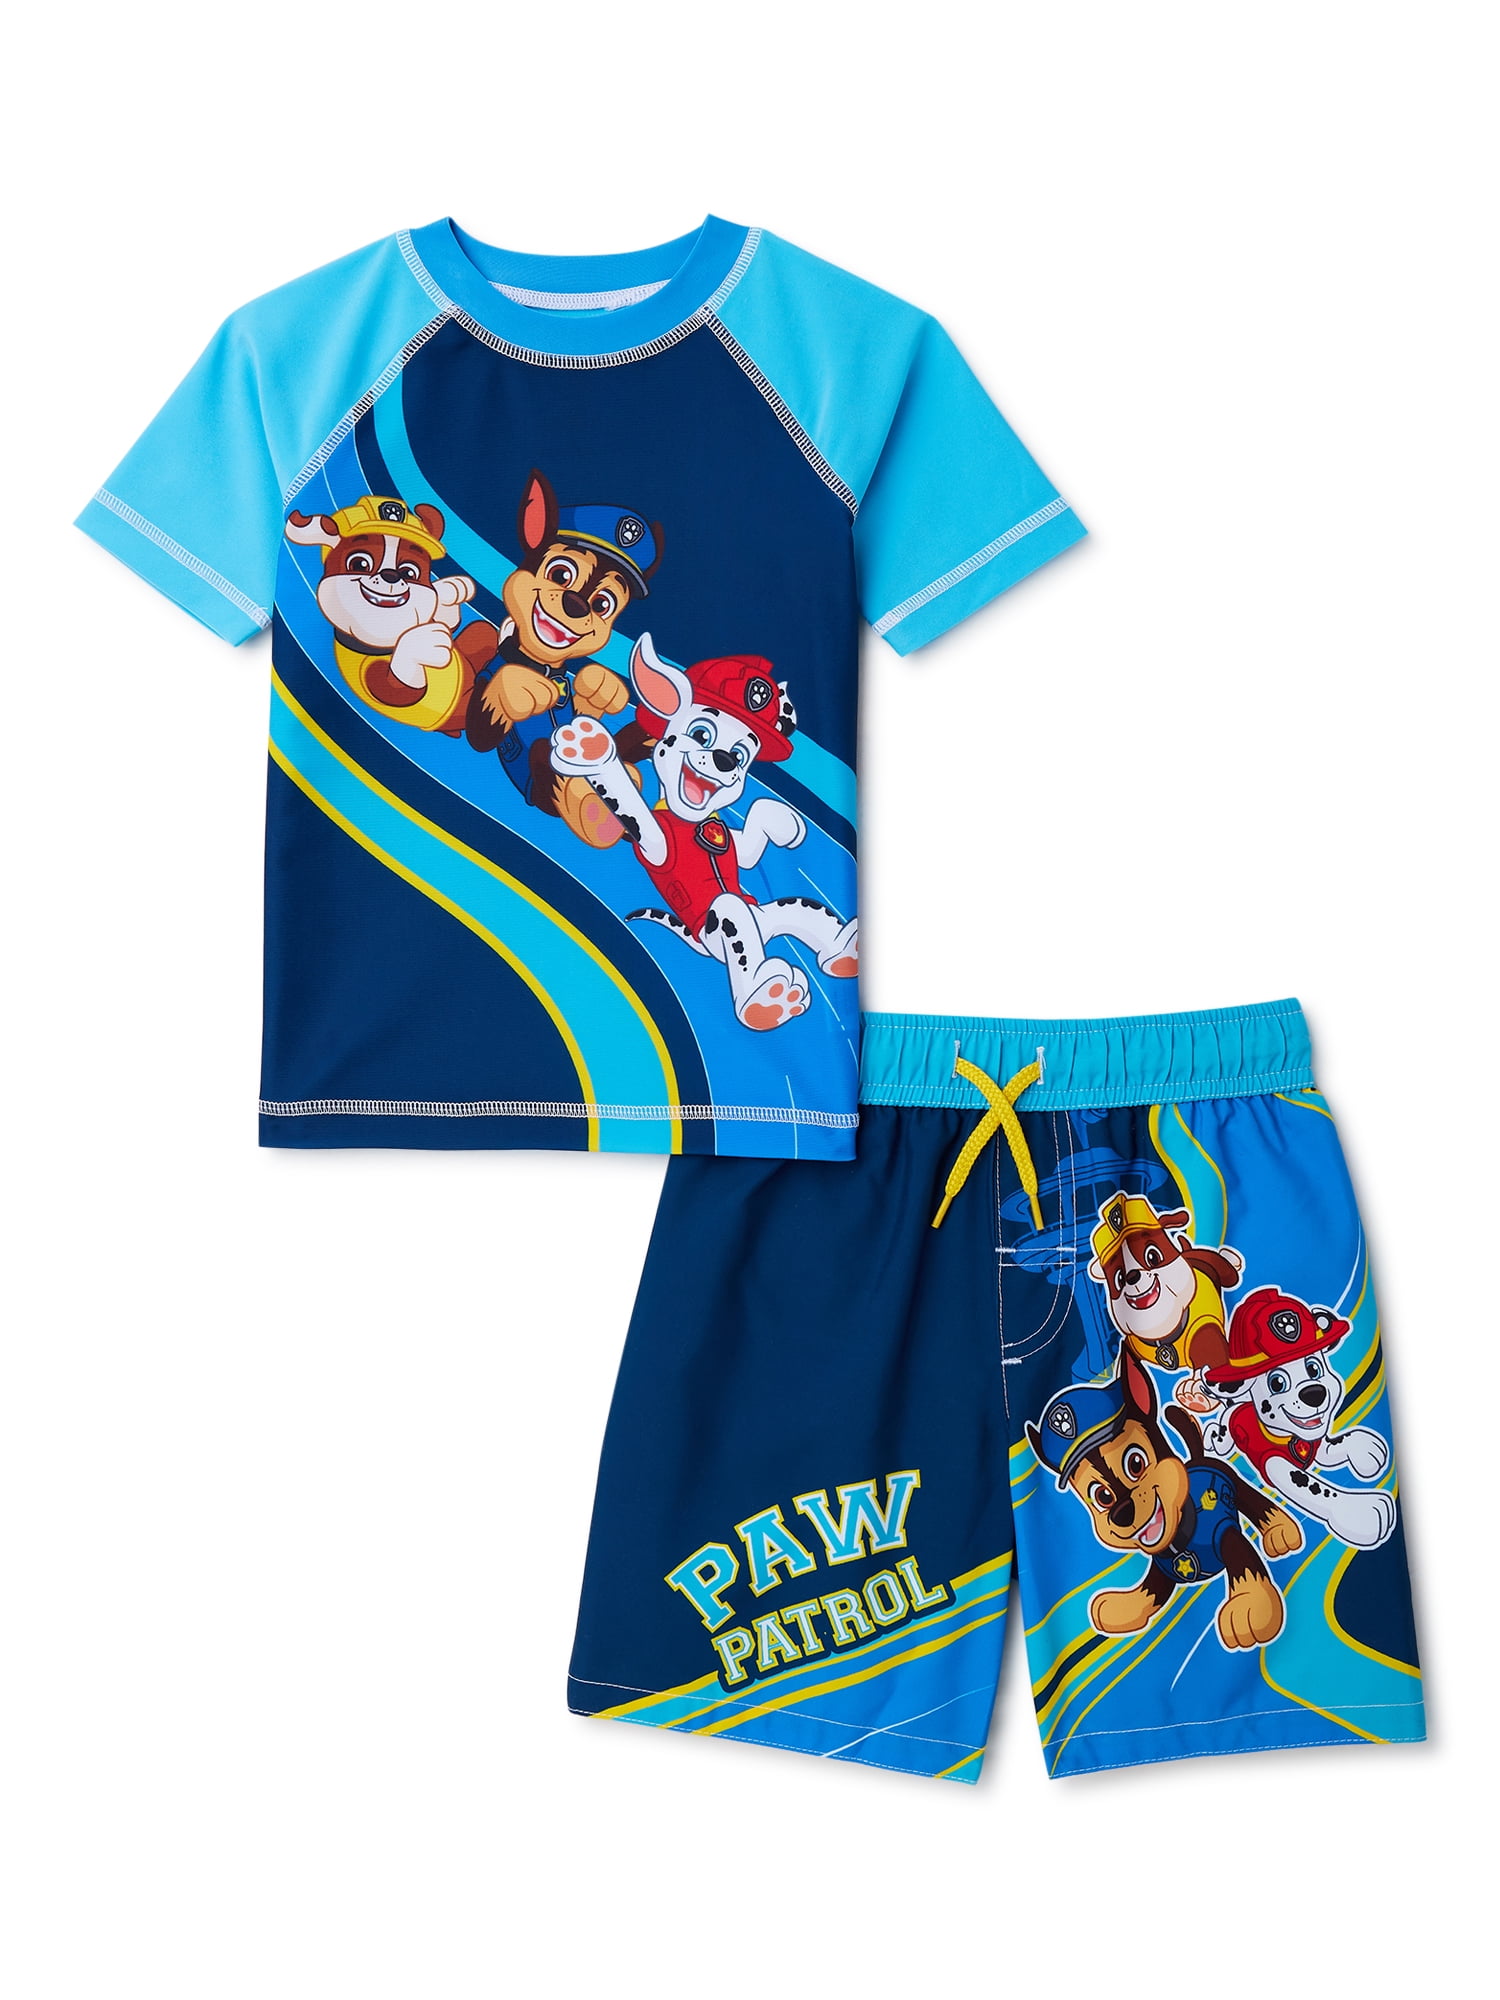 Boys Paw Patrol Sunsuit Swimwear Nickelodeon Paw Patrol Boys Swimsuit 